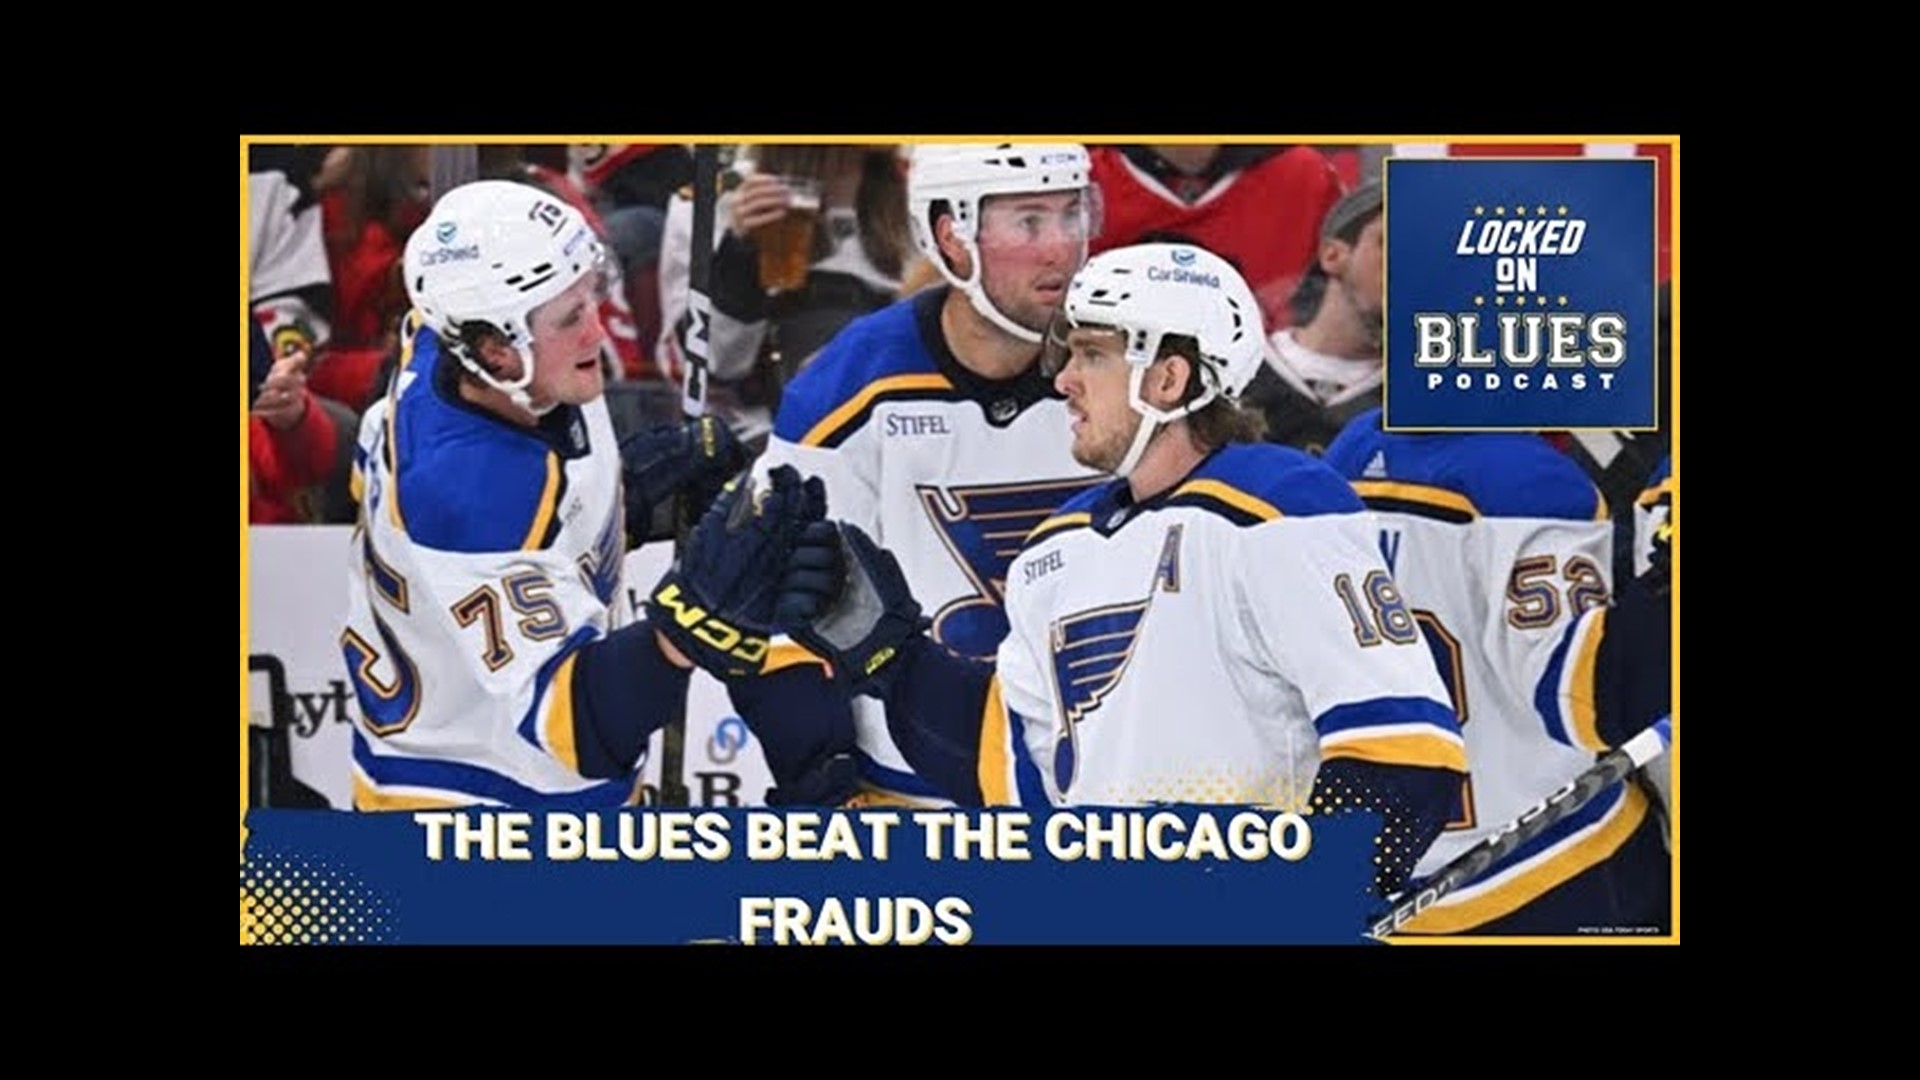 St. Louis Blues season opener is the hottest ticket in hockey - St. Louis  Business Journal